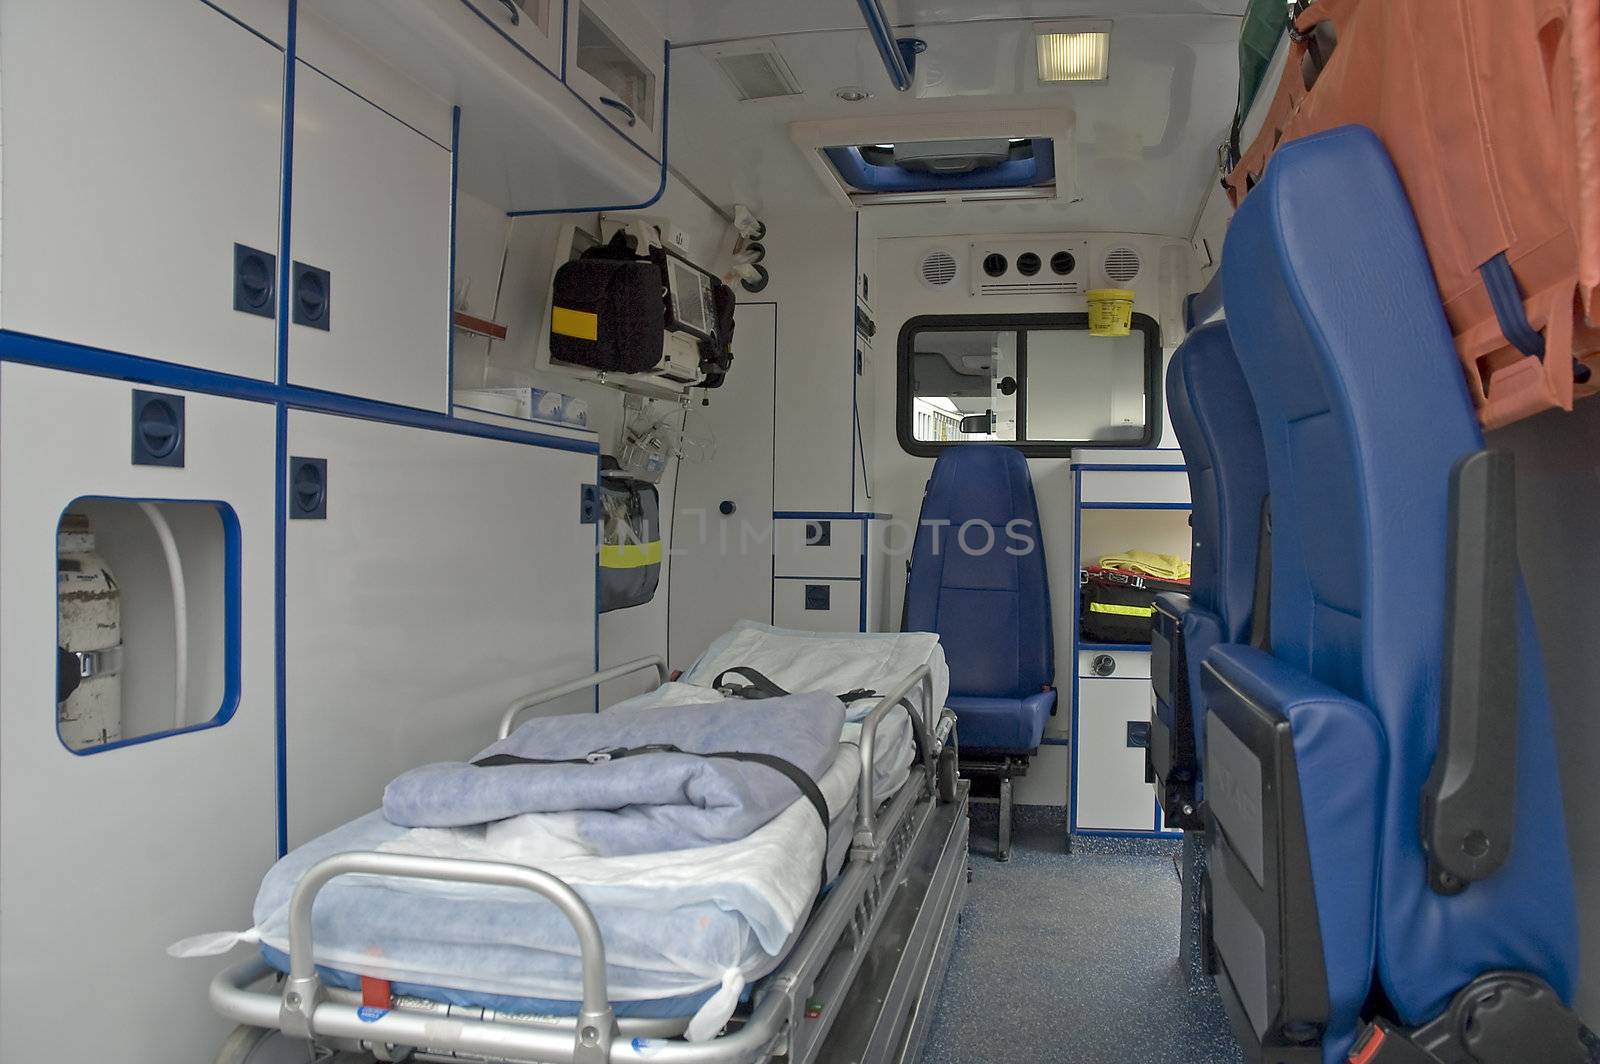 ambulance car interior photo with no people. 